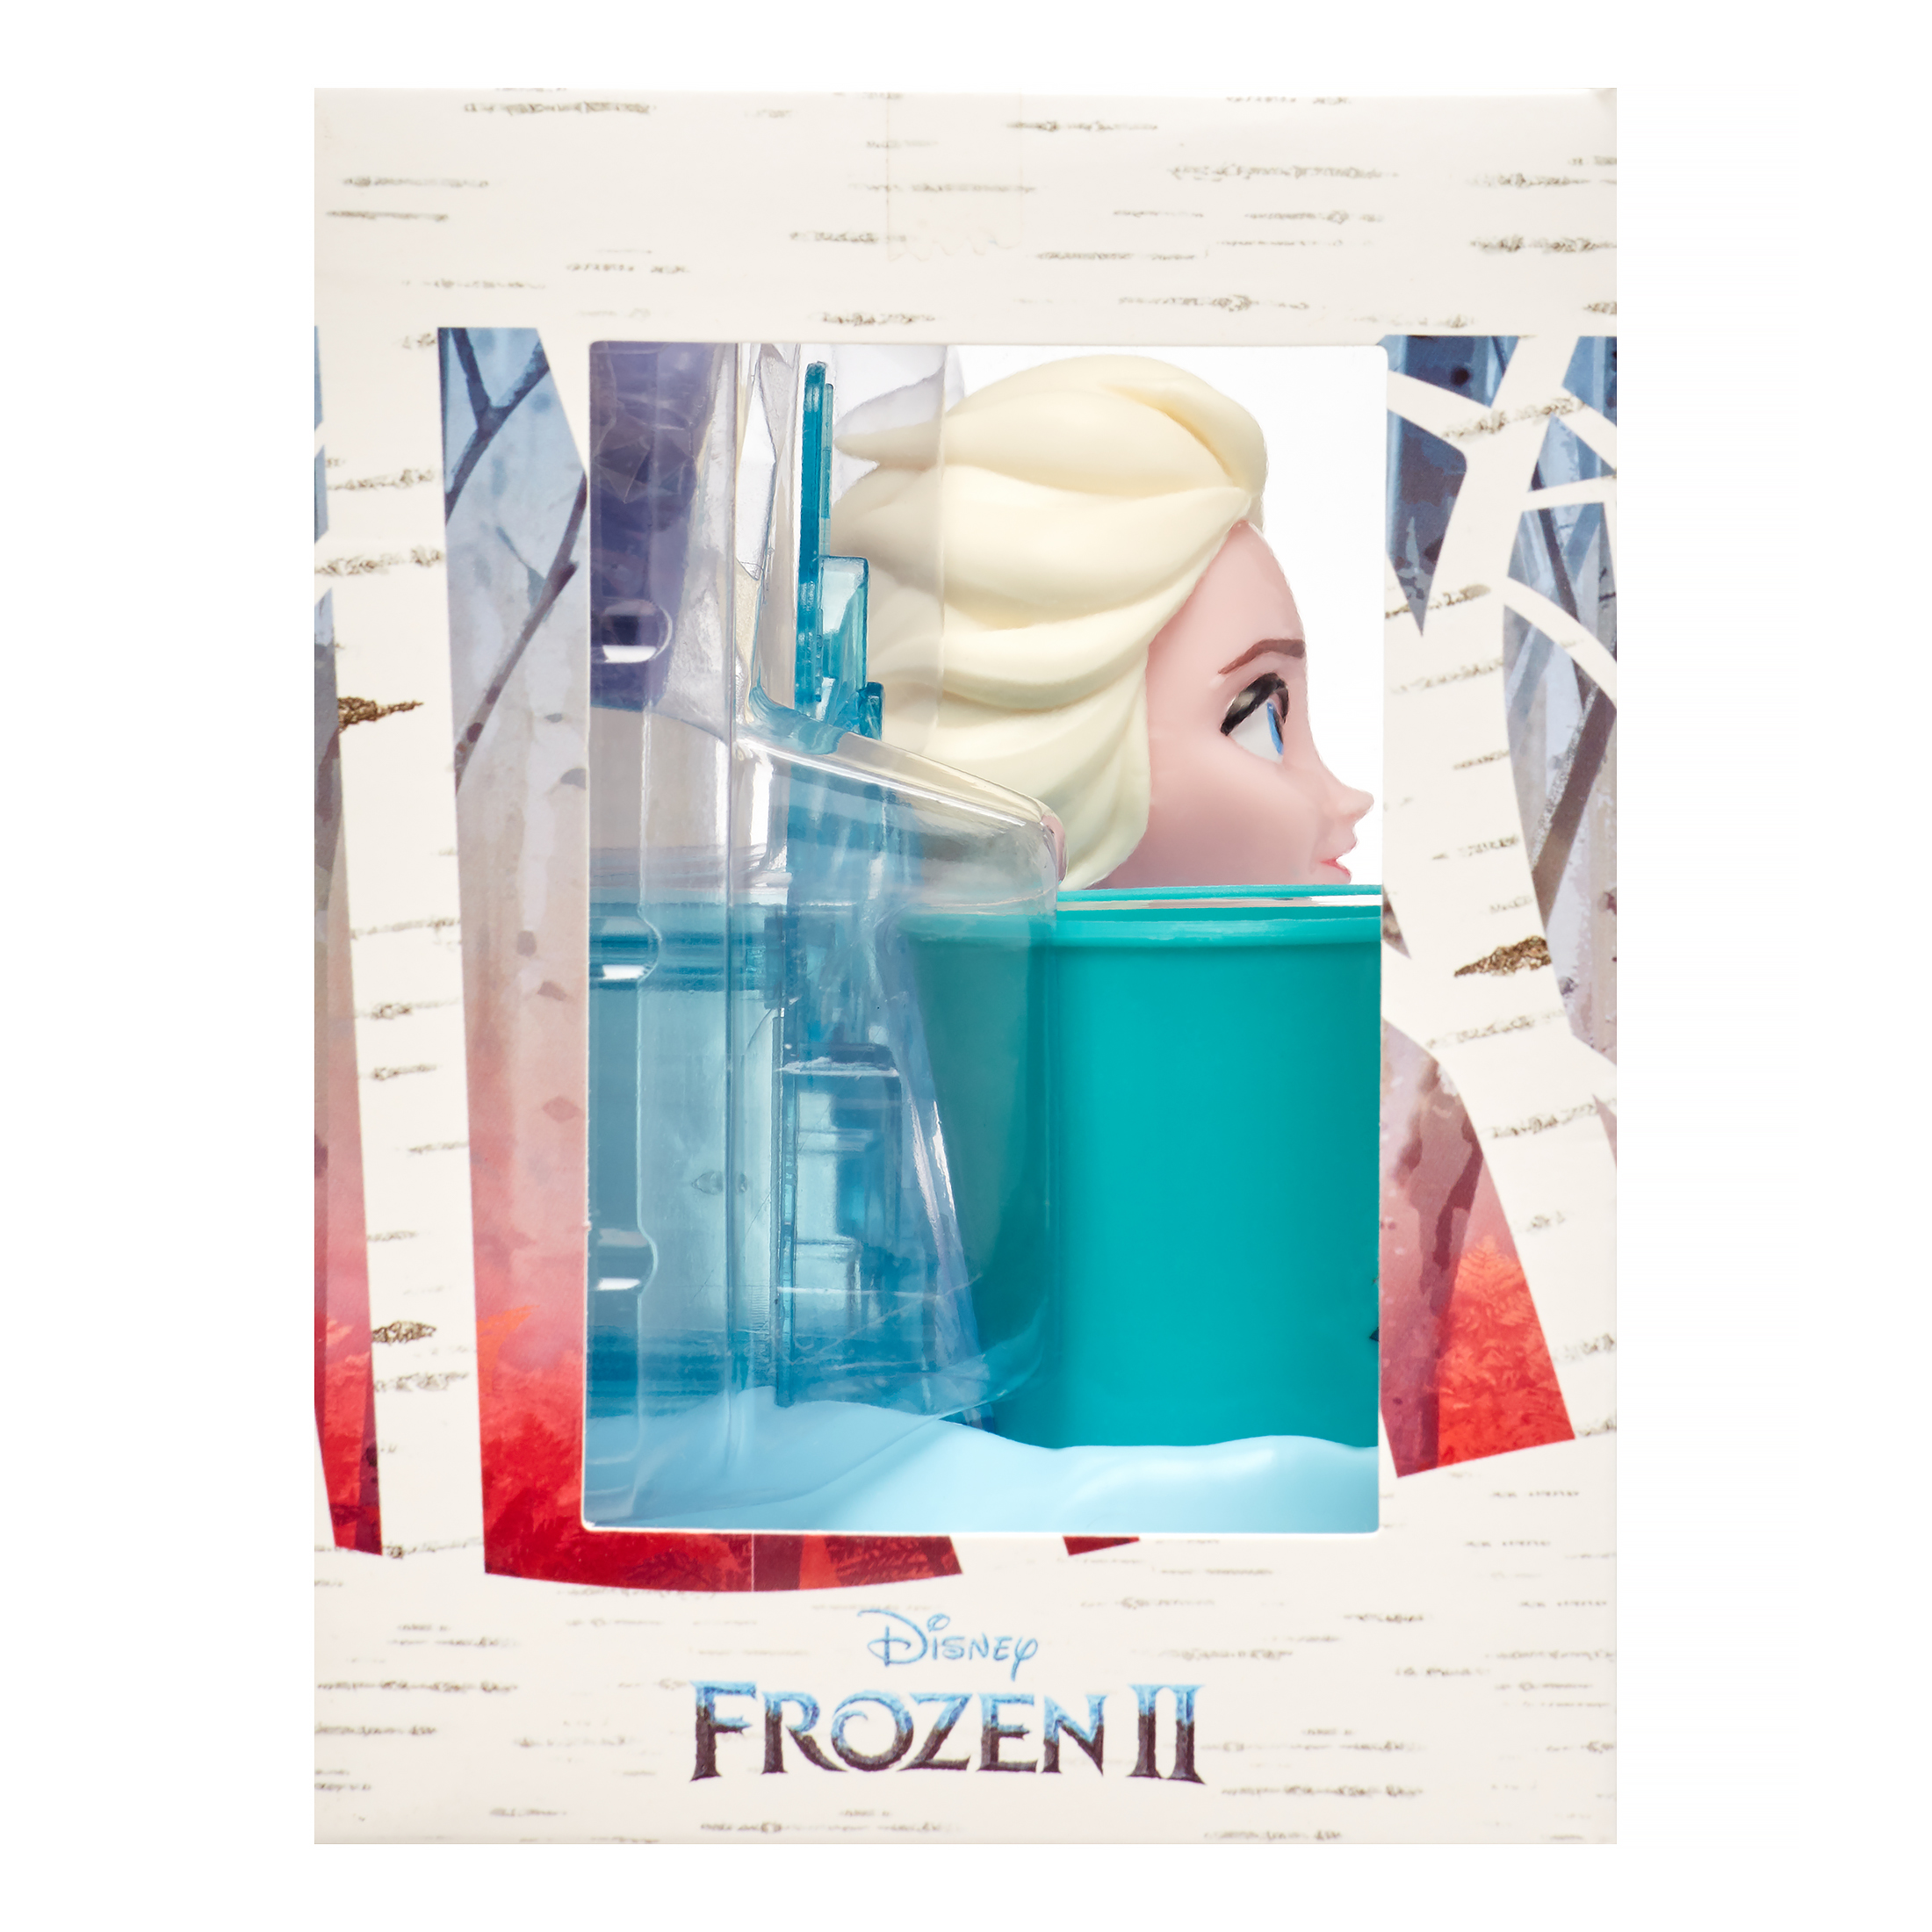 Disney Frozen II 3-Piece Great Smile Elsa Toothbrush and Holder Set - image 4 of 6